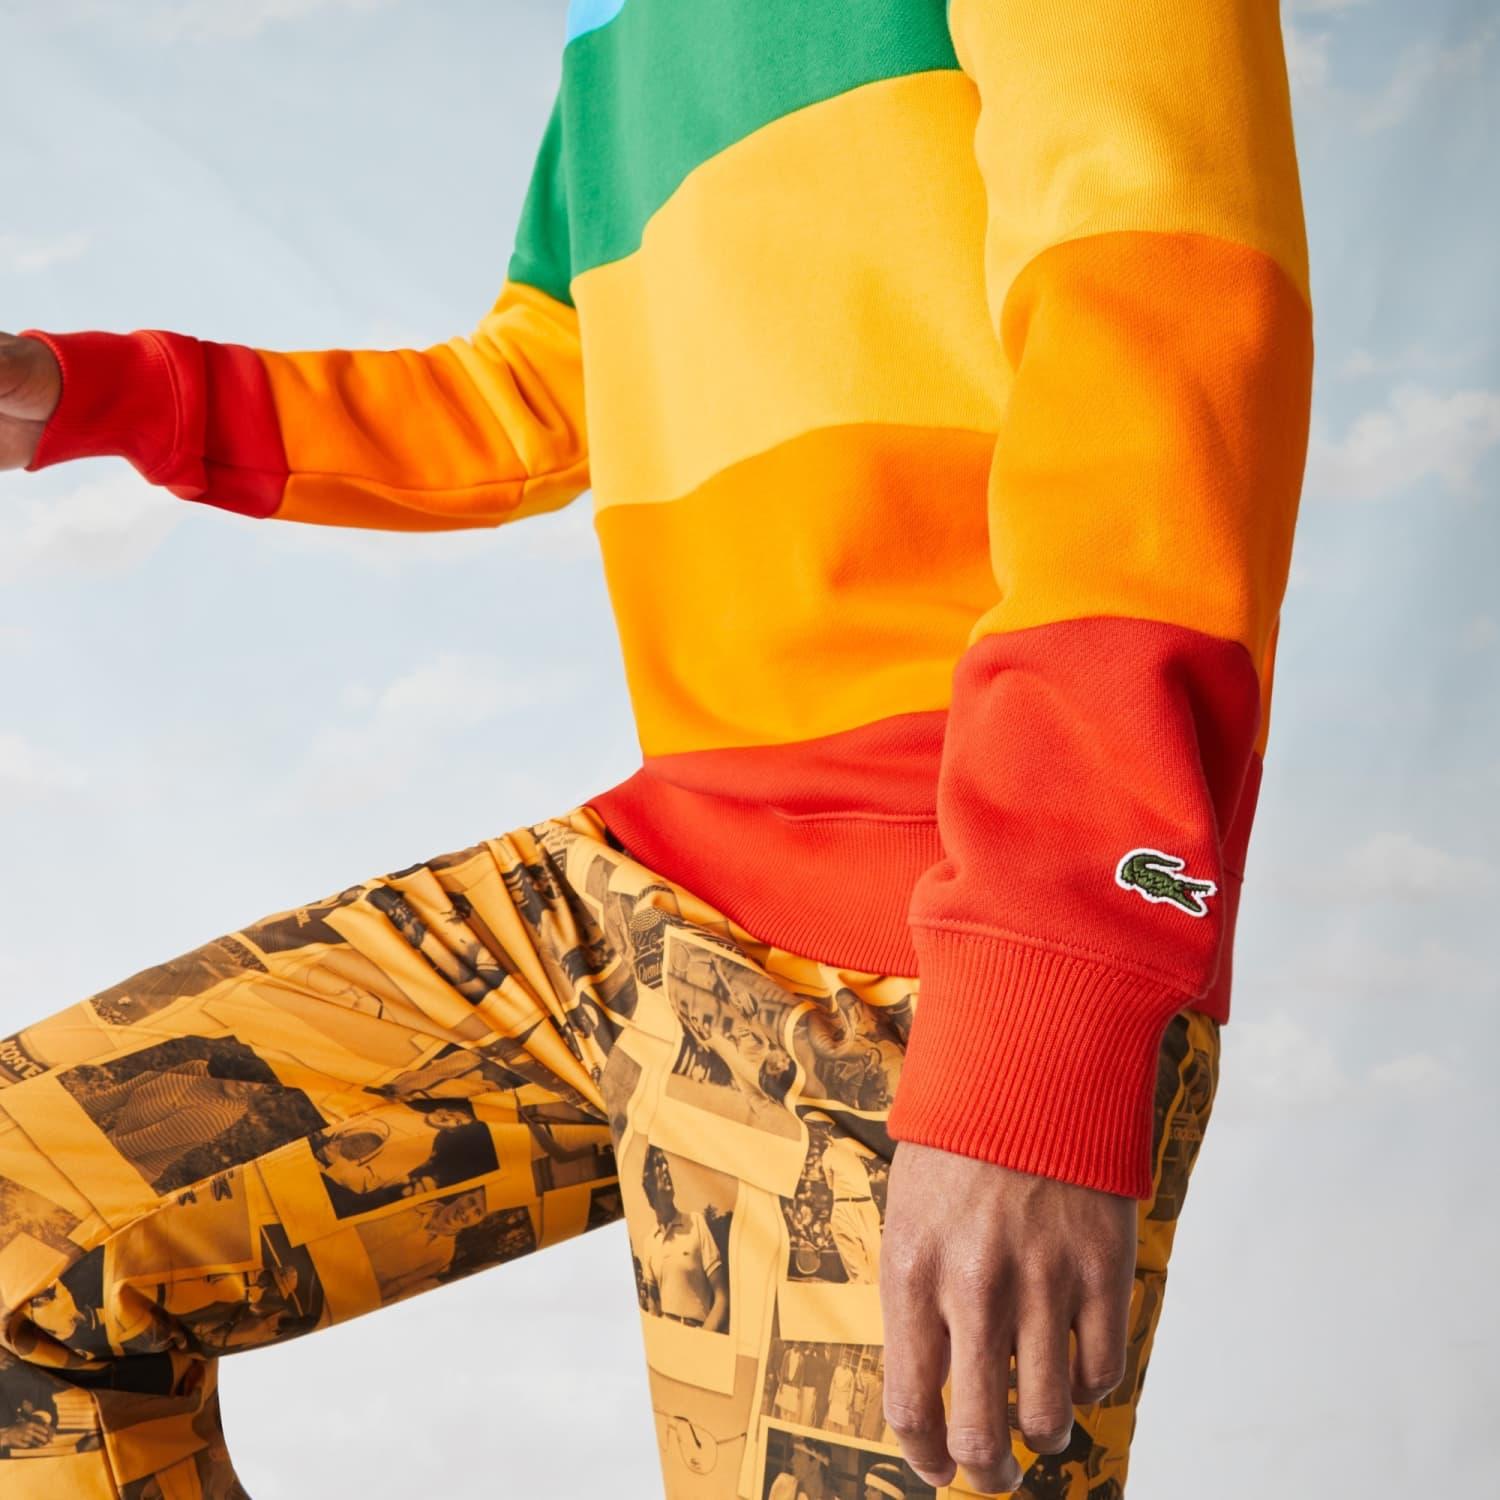 Lacoste Polaroid Colour Striped Fleece Sweatshirt Multicolour for Men | Lyst